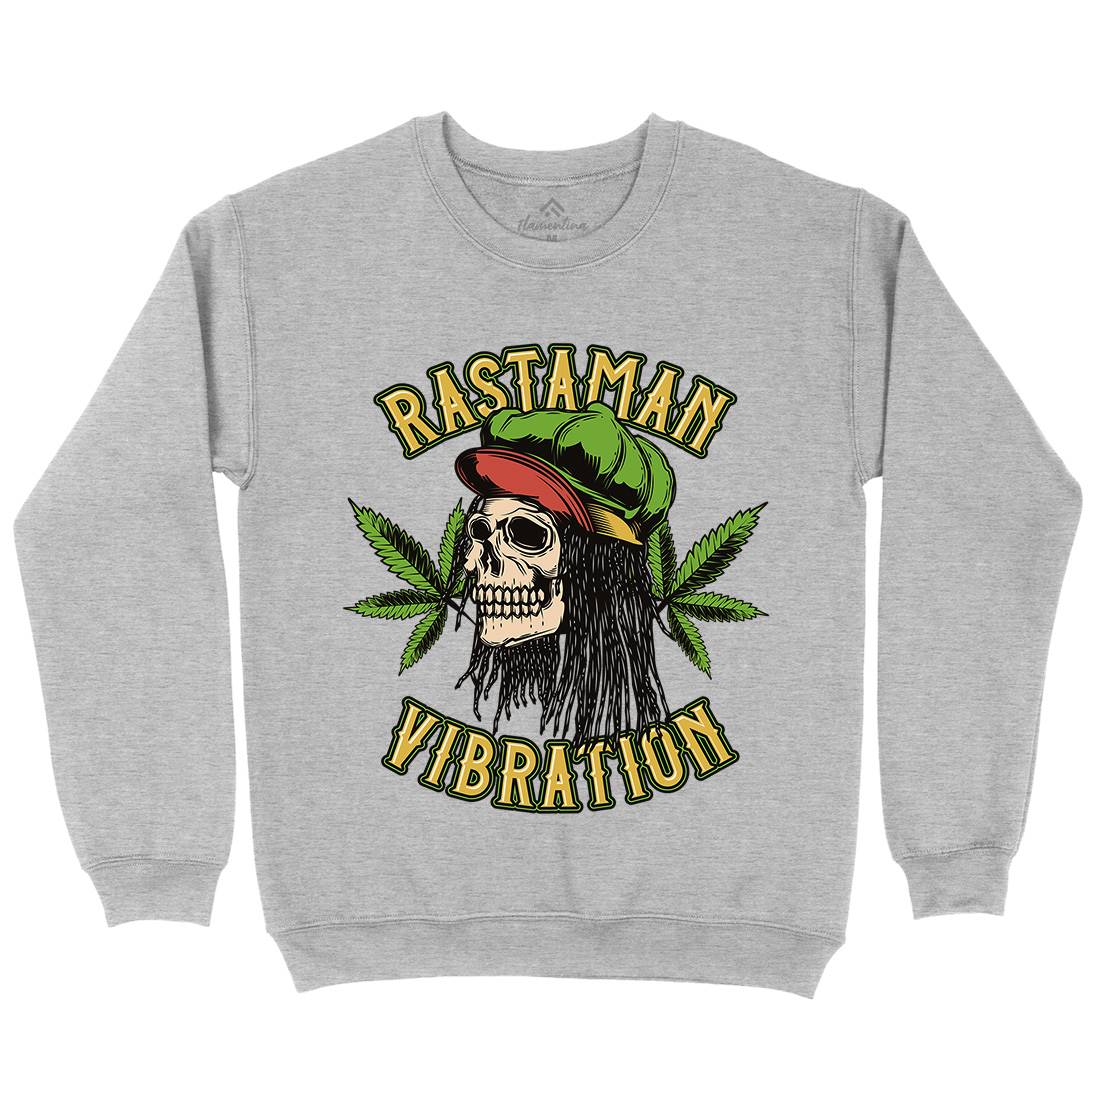 Rastaman Vibration Kids Crew Neck Sweatshirt Drugs B805